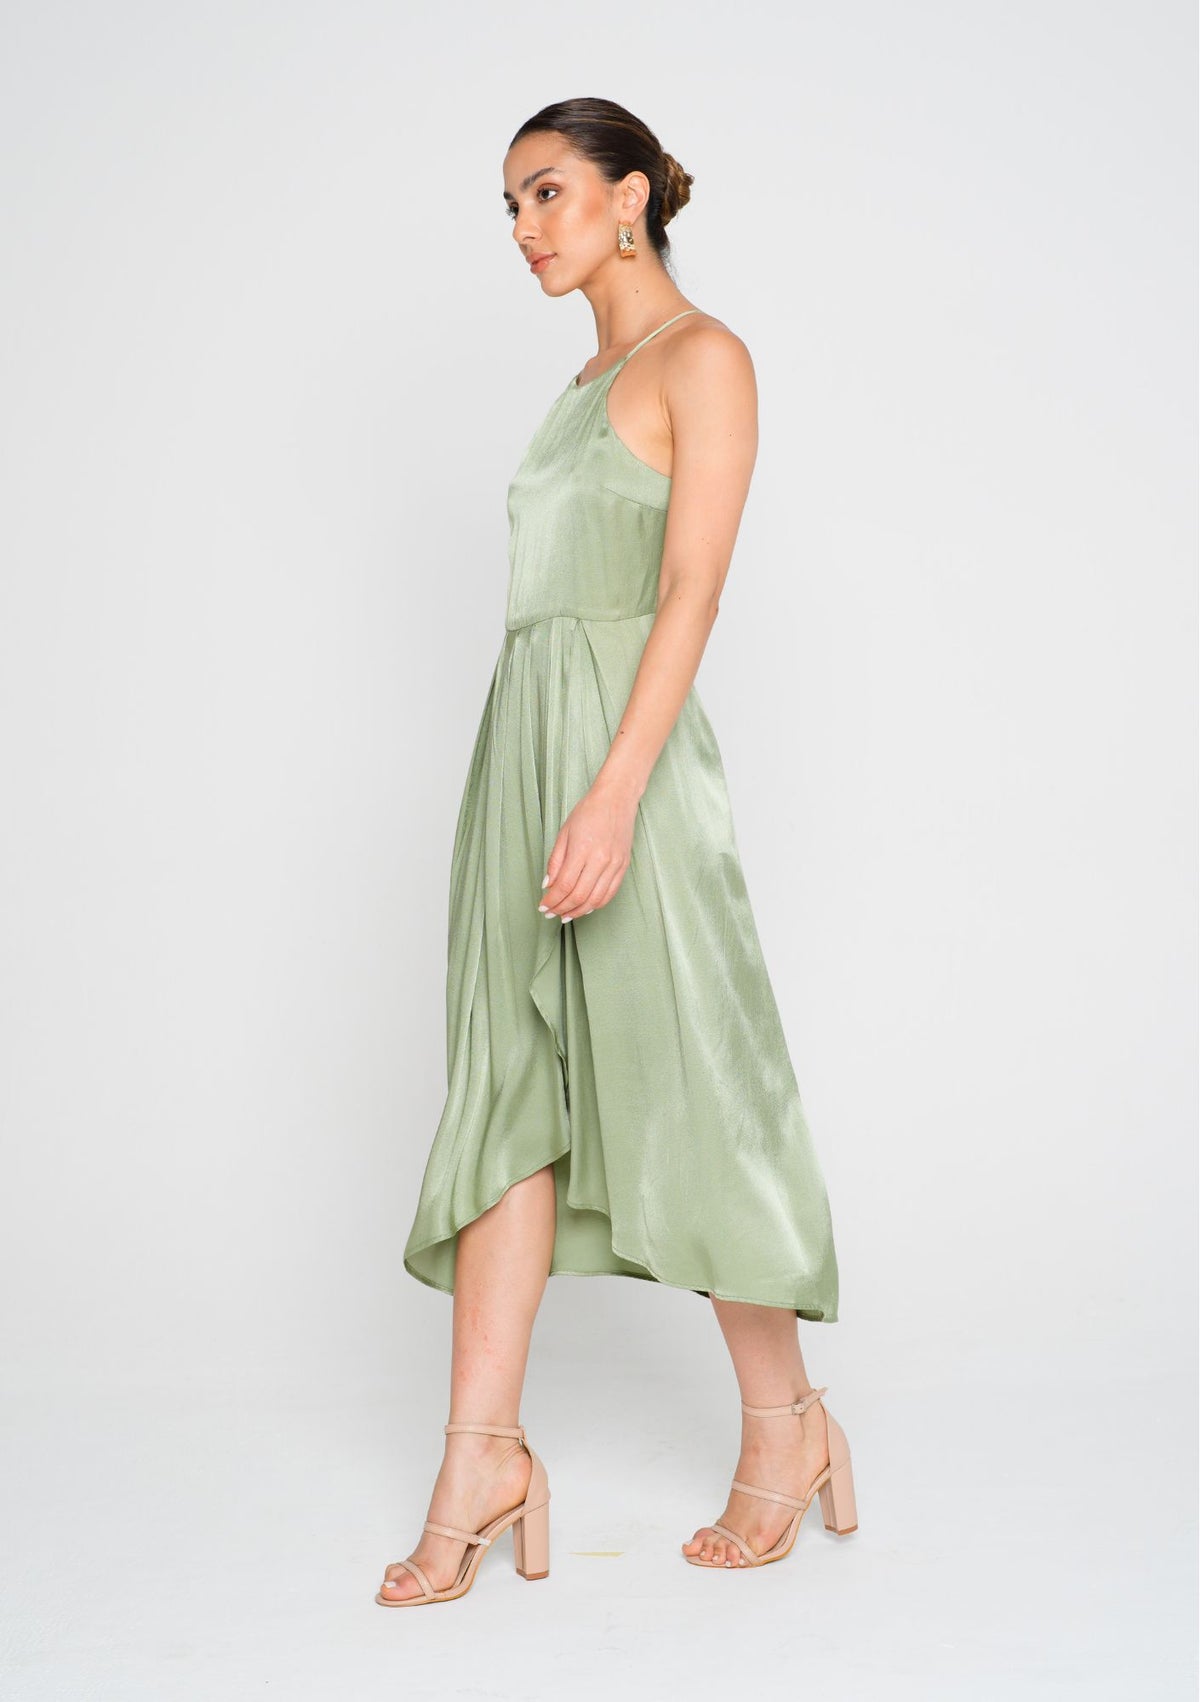 Brunch Dress - Photographed in Olive Green Satin